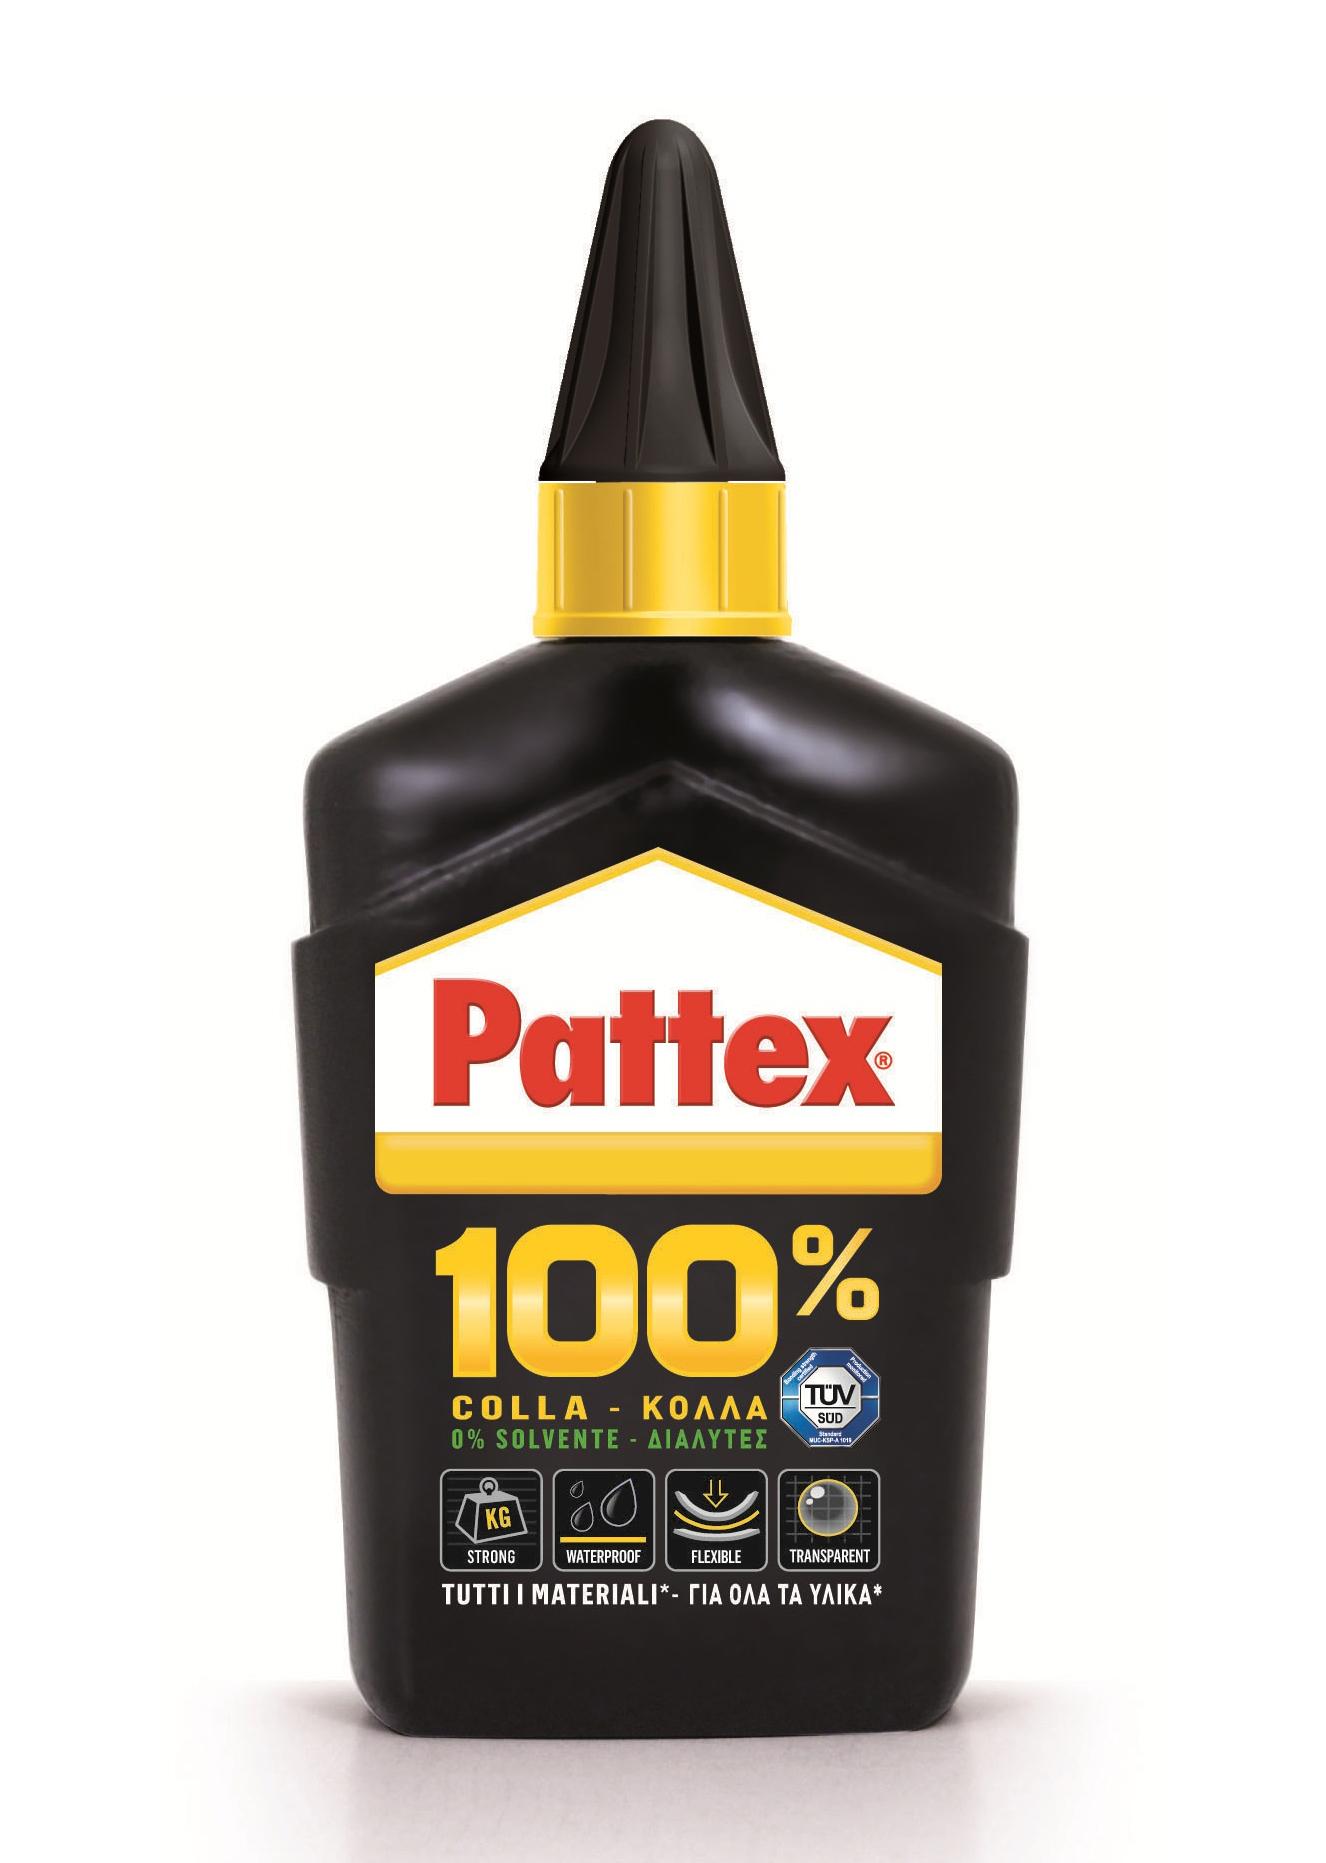 Pattex - 100% colla flextec trasparente 100 g